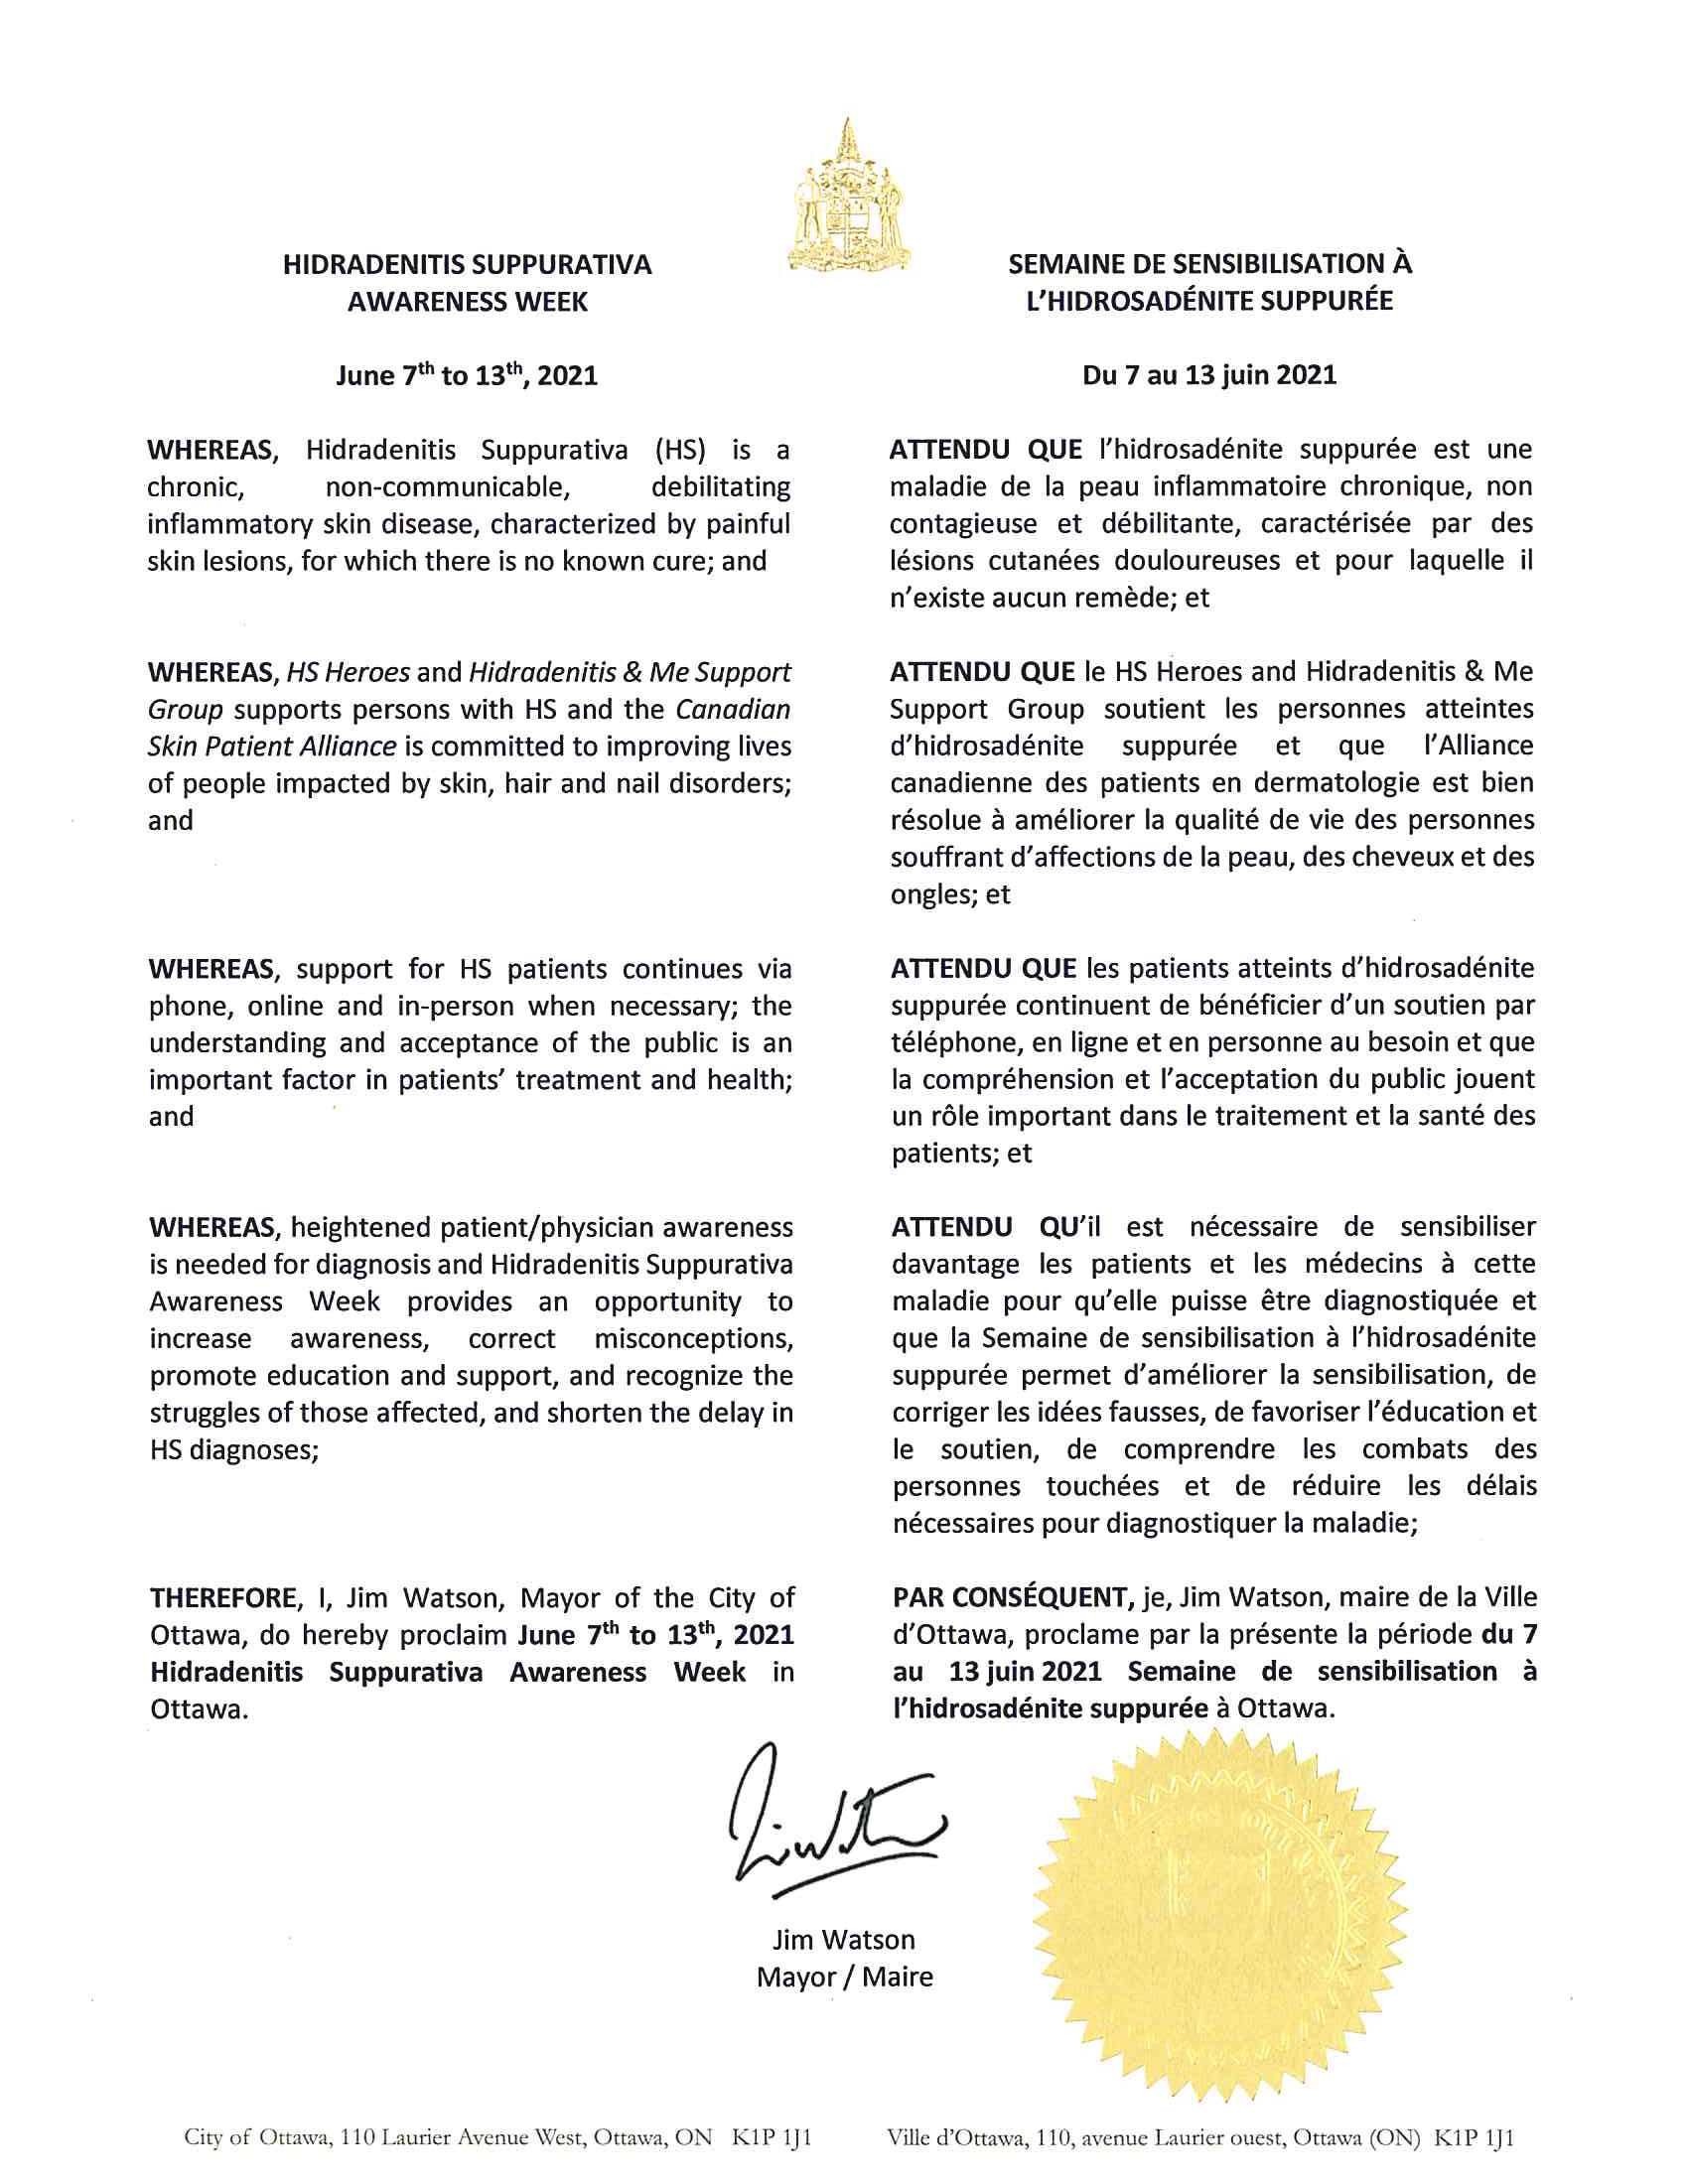 OTTAWA Proclamation 2021 Hidradenitis Suppurativa Awareness Week